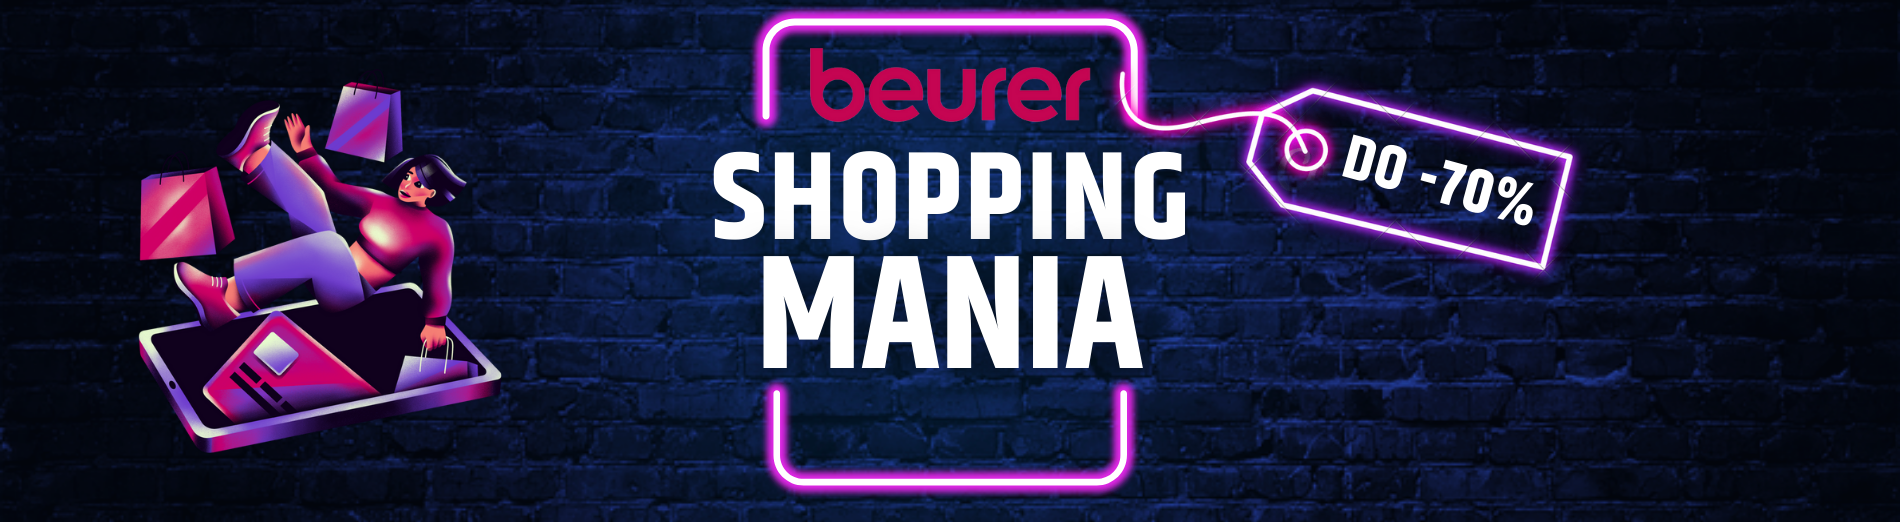 Beurer shopping mania